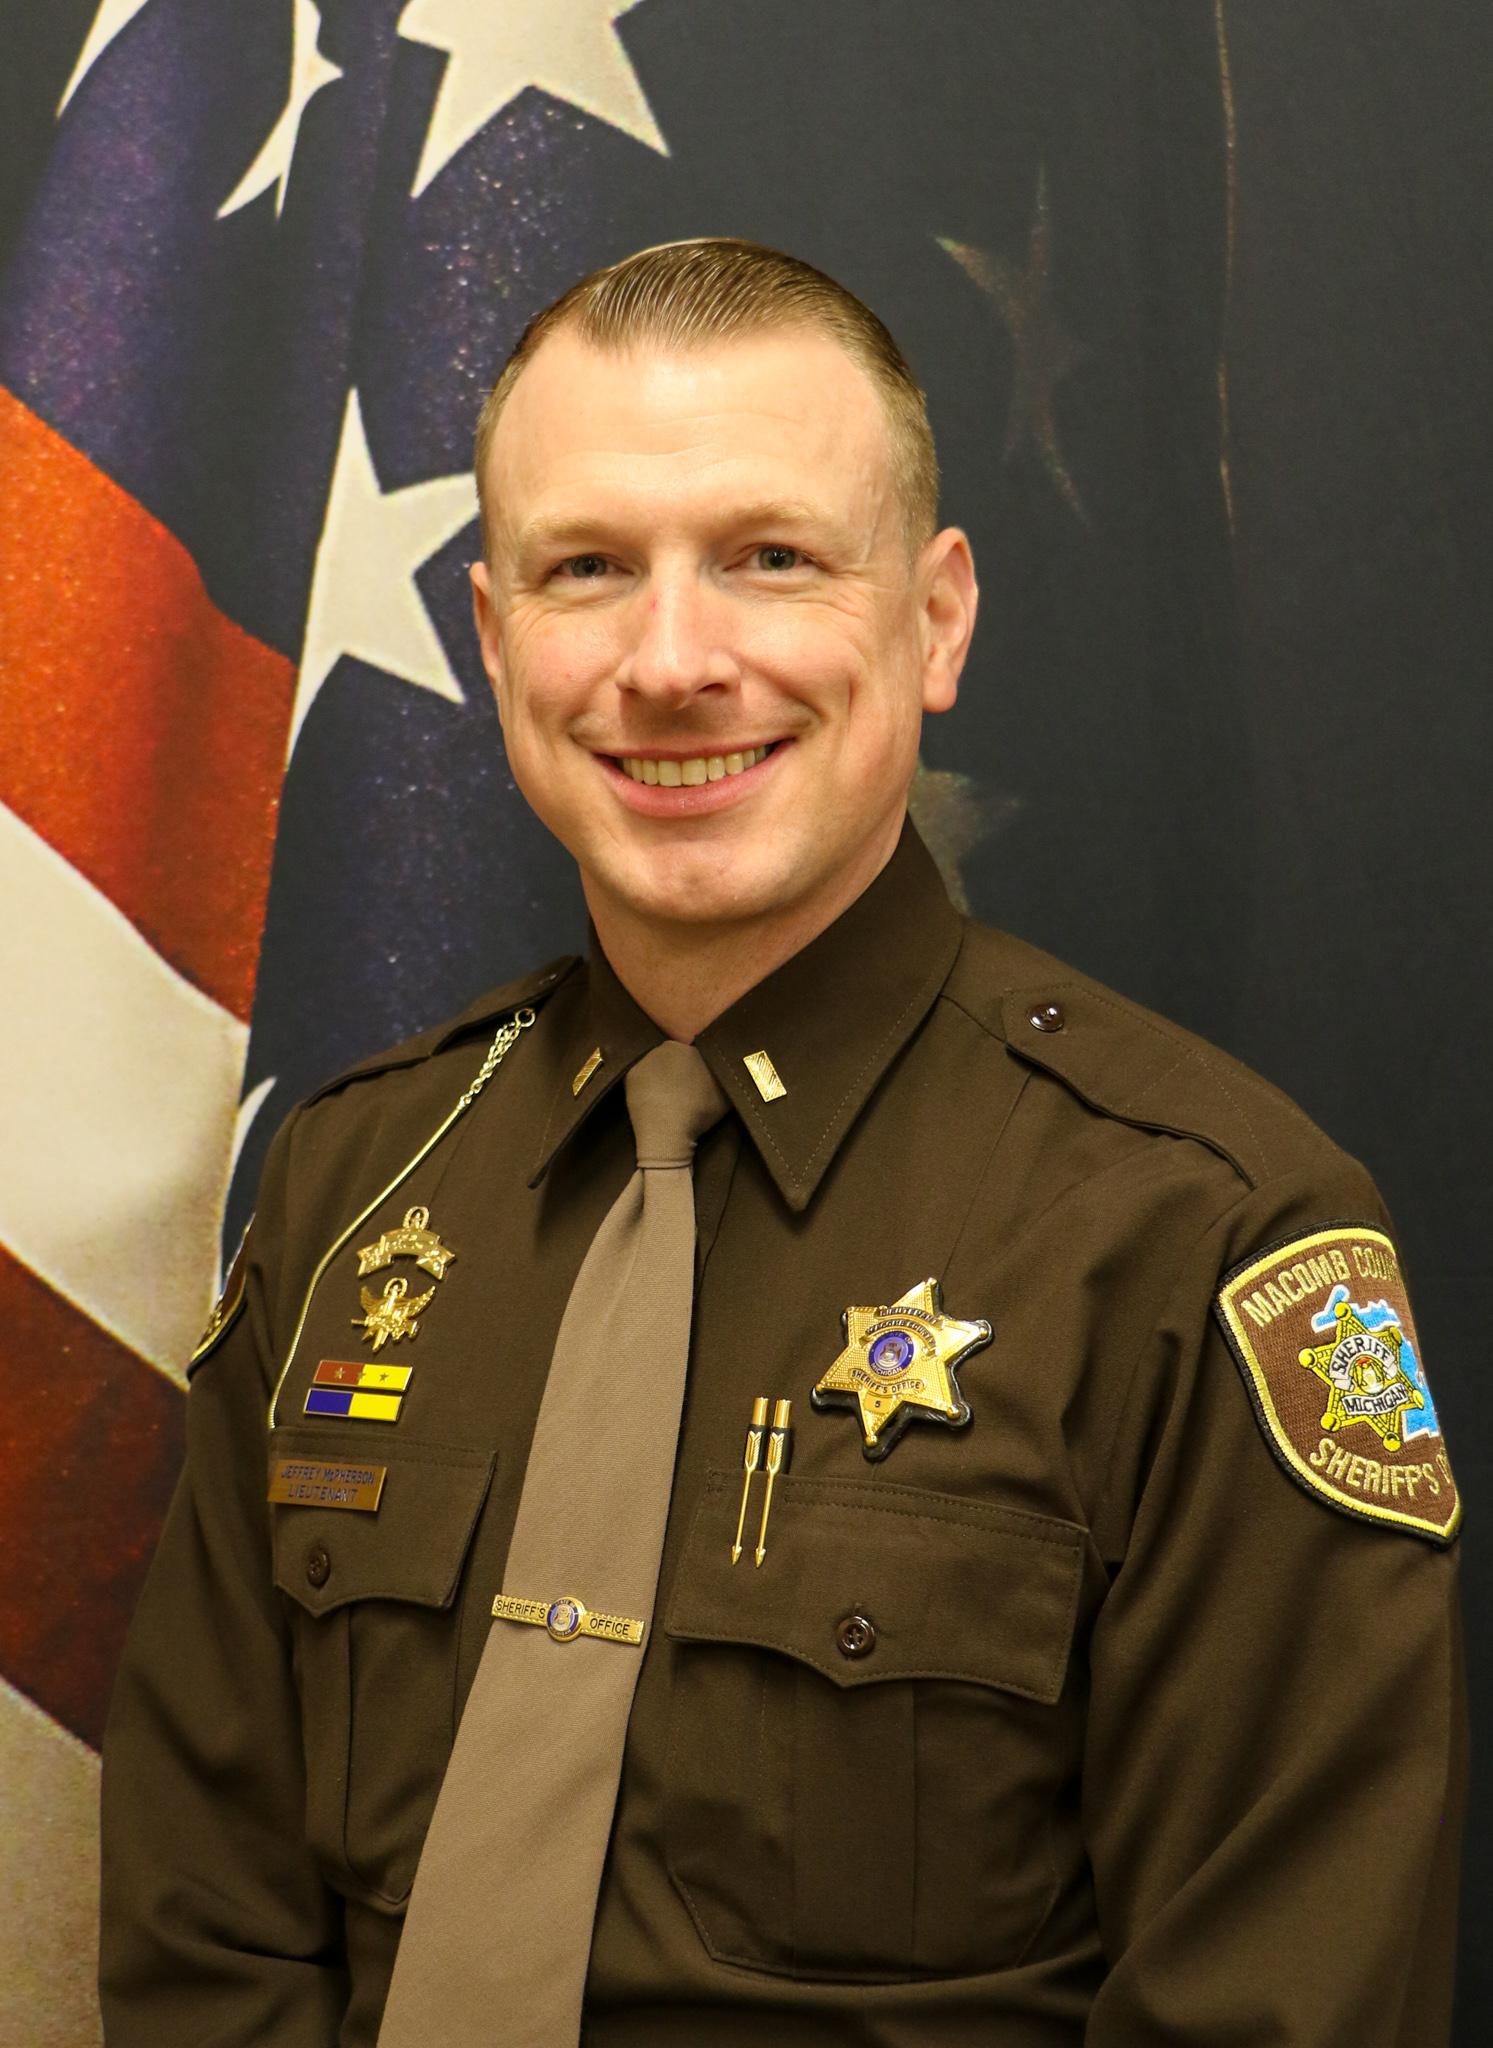 Sheriff - Lieutenant McPherson